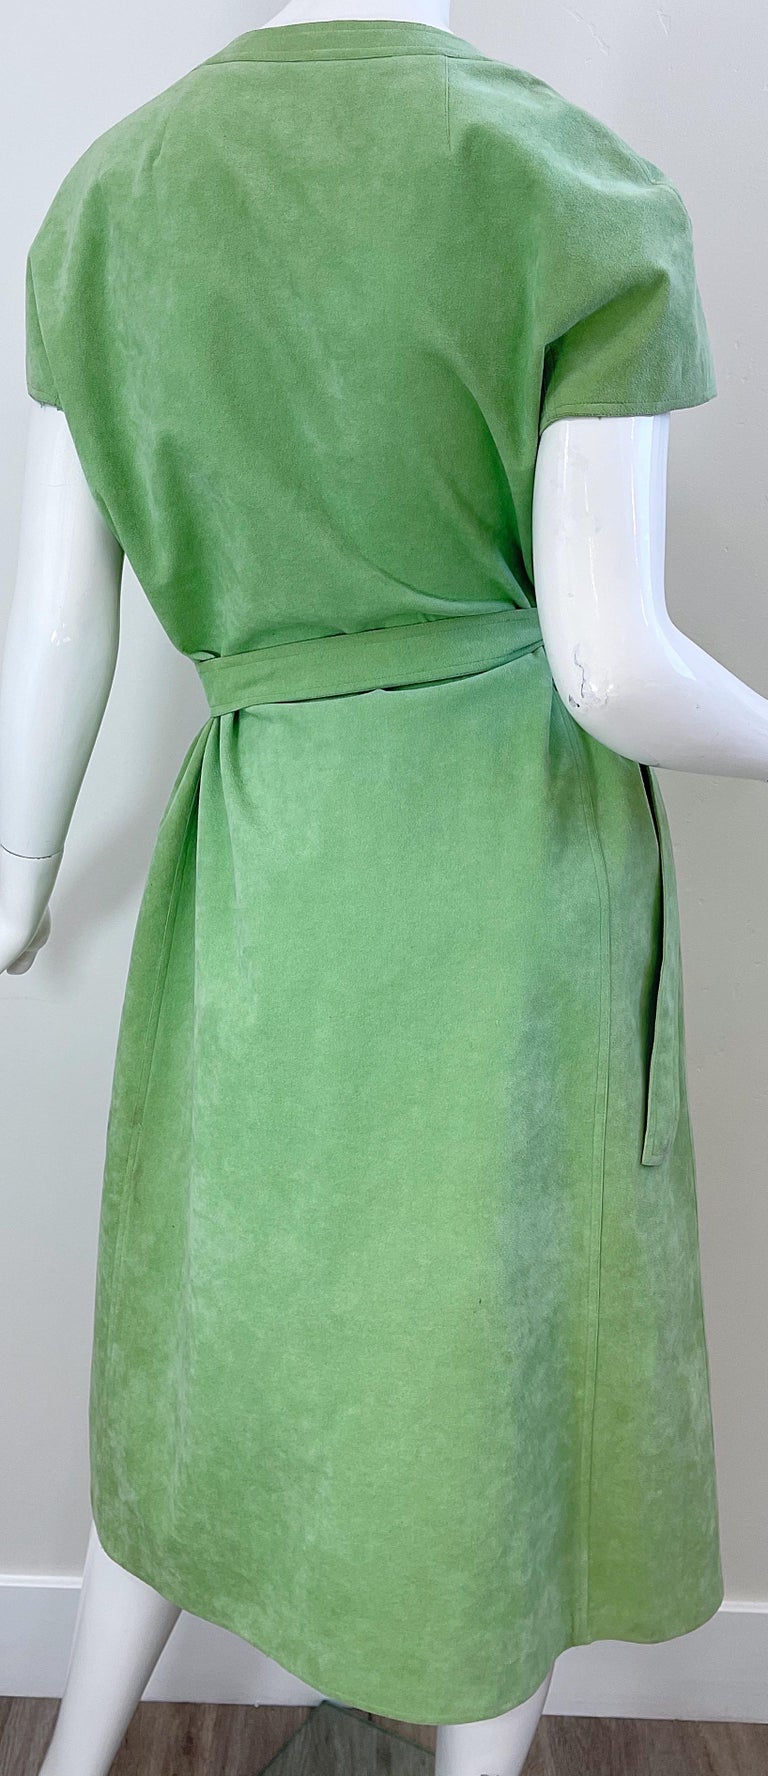 Halston 1970s Pistachio Green Ultra Suede Short Sleeve Vintage 70s Shirt Dress For Sale 8